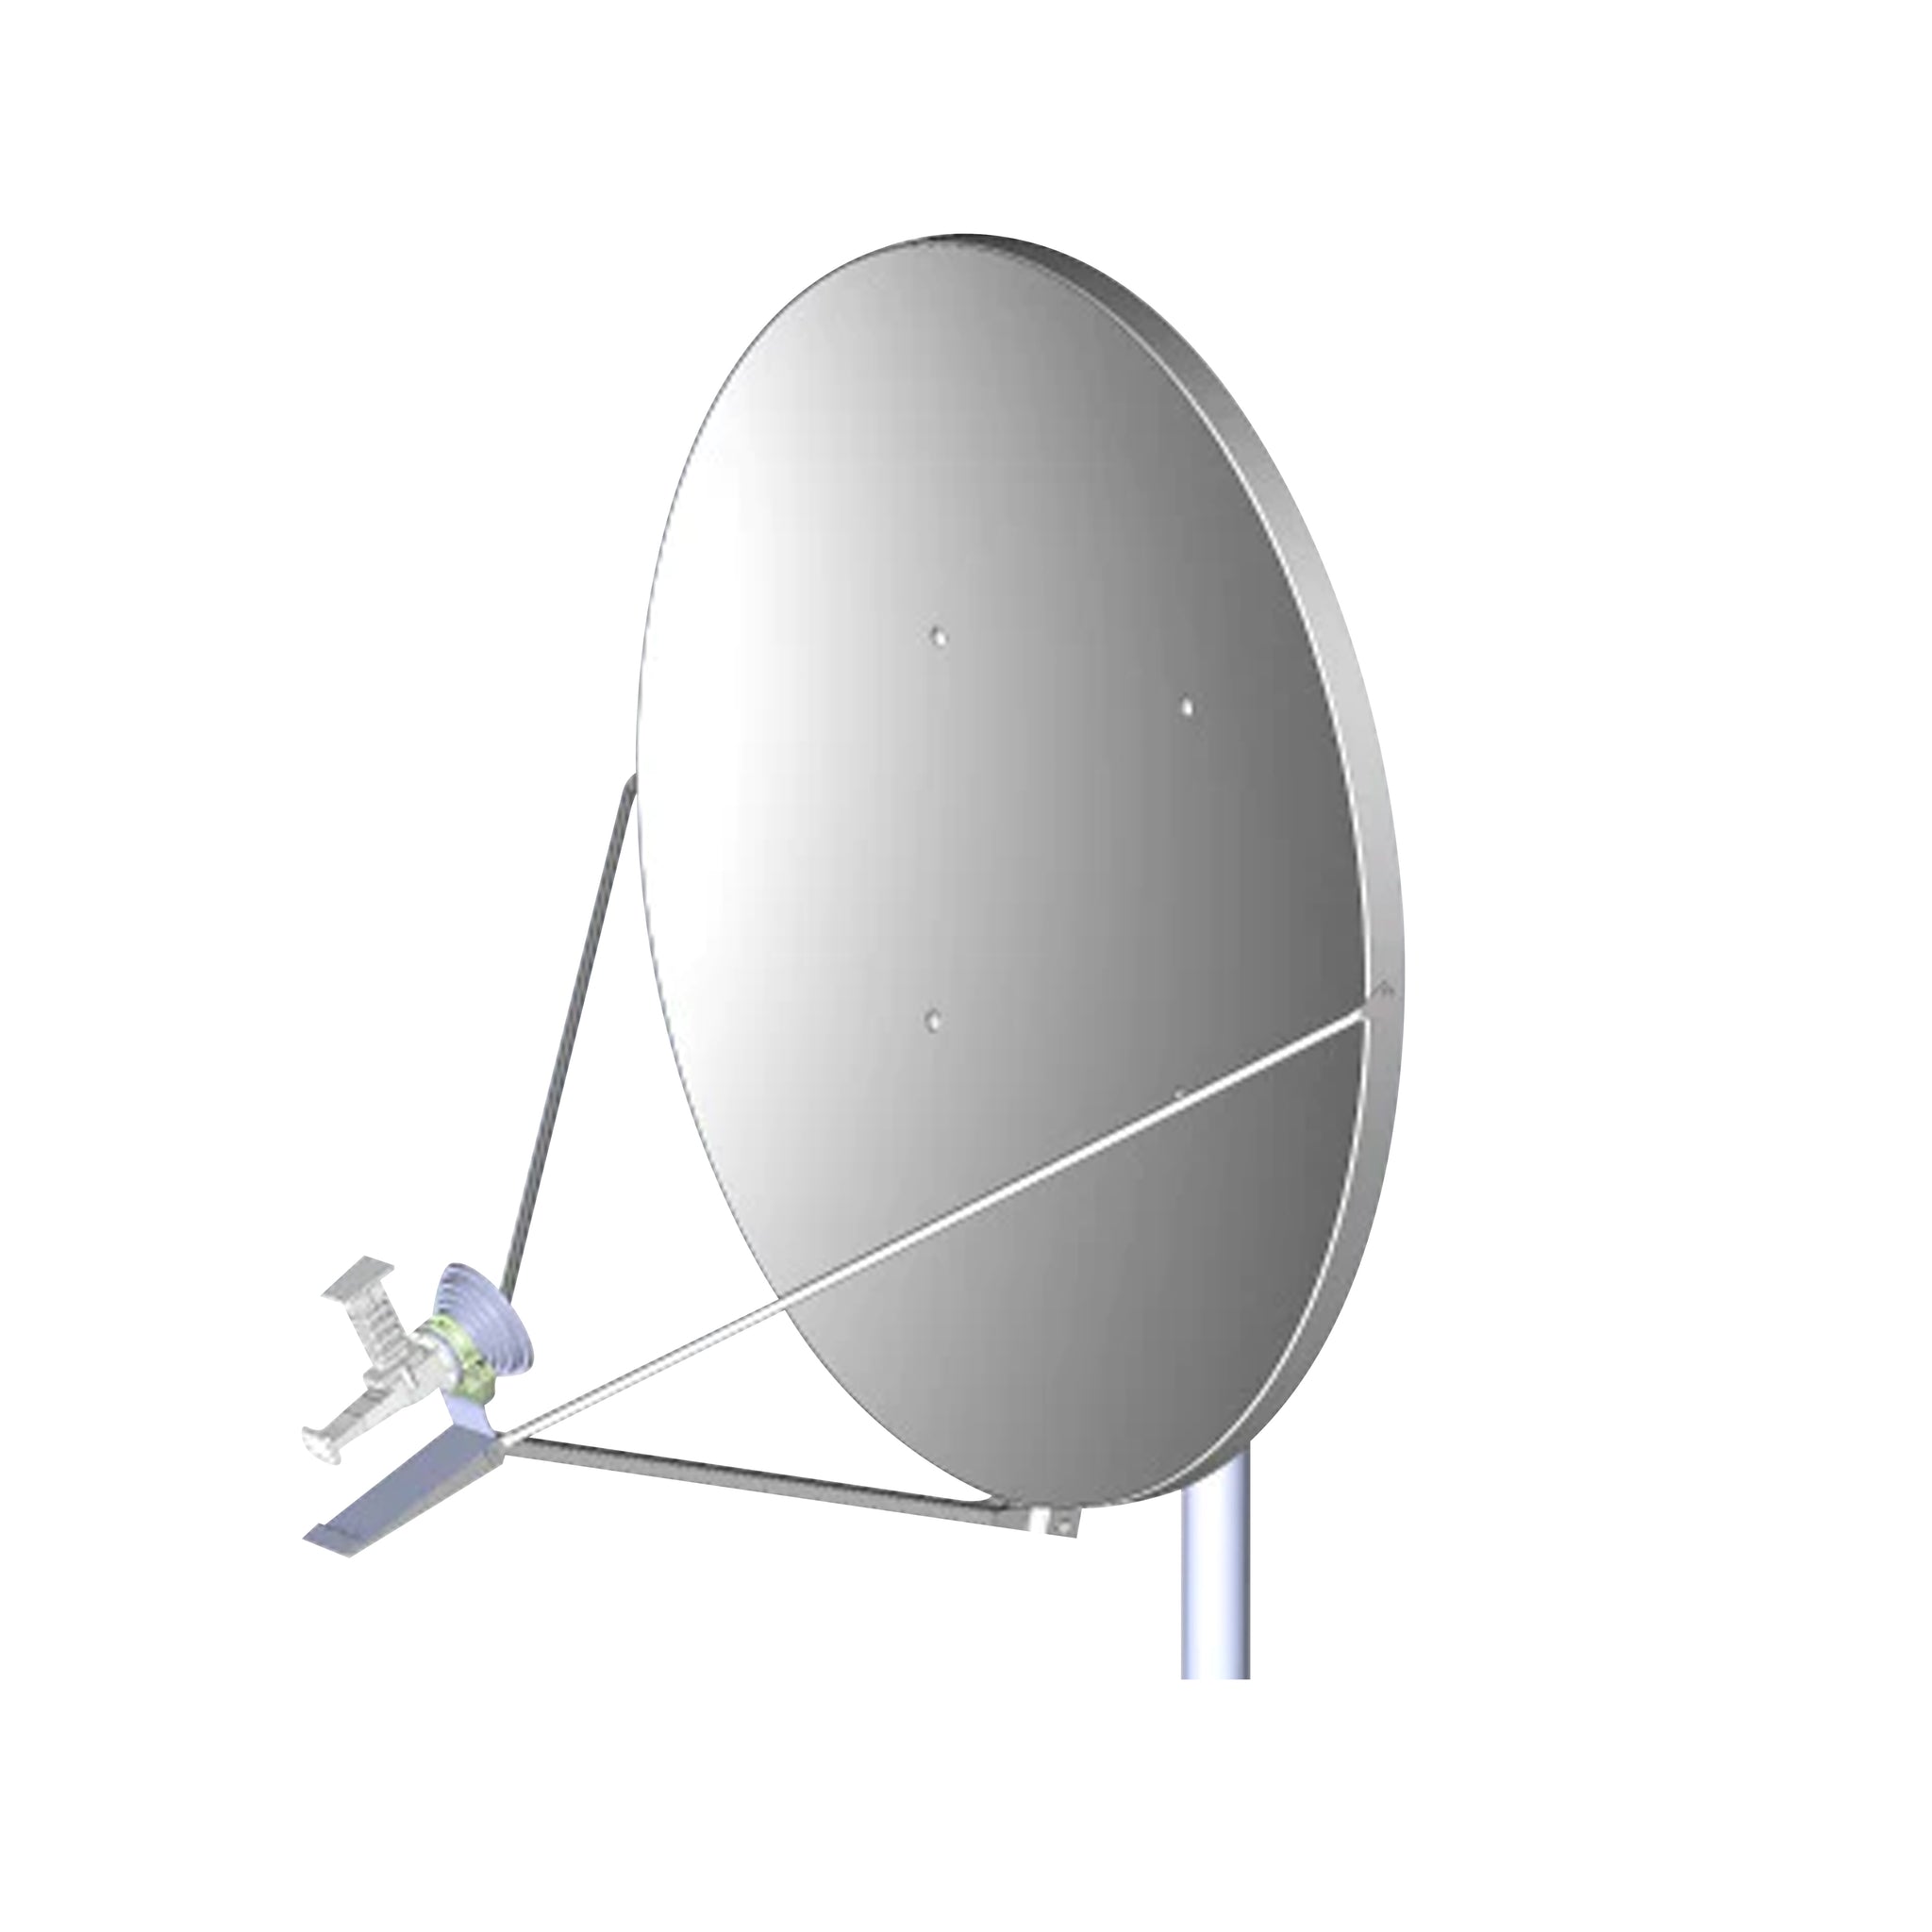 1.8m Linear Receiver Transmitter (Rx/Tx) Class III Antenna System